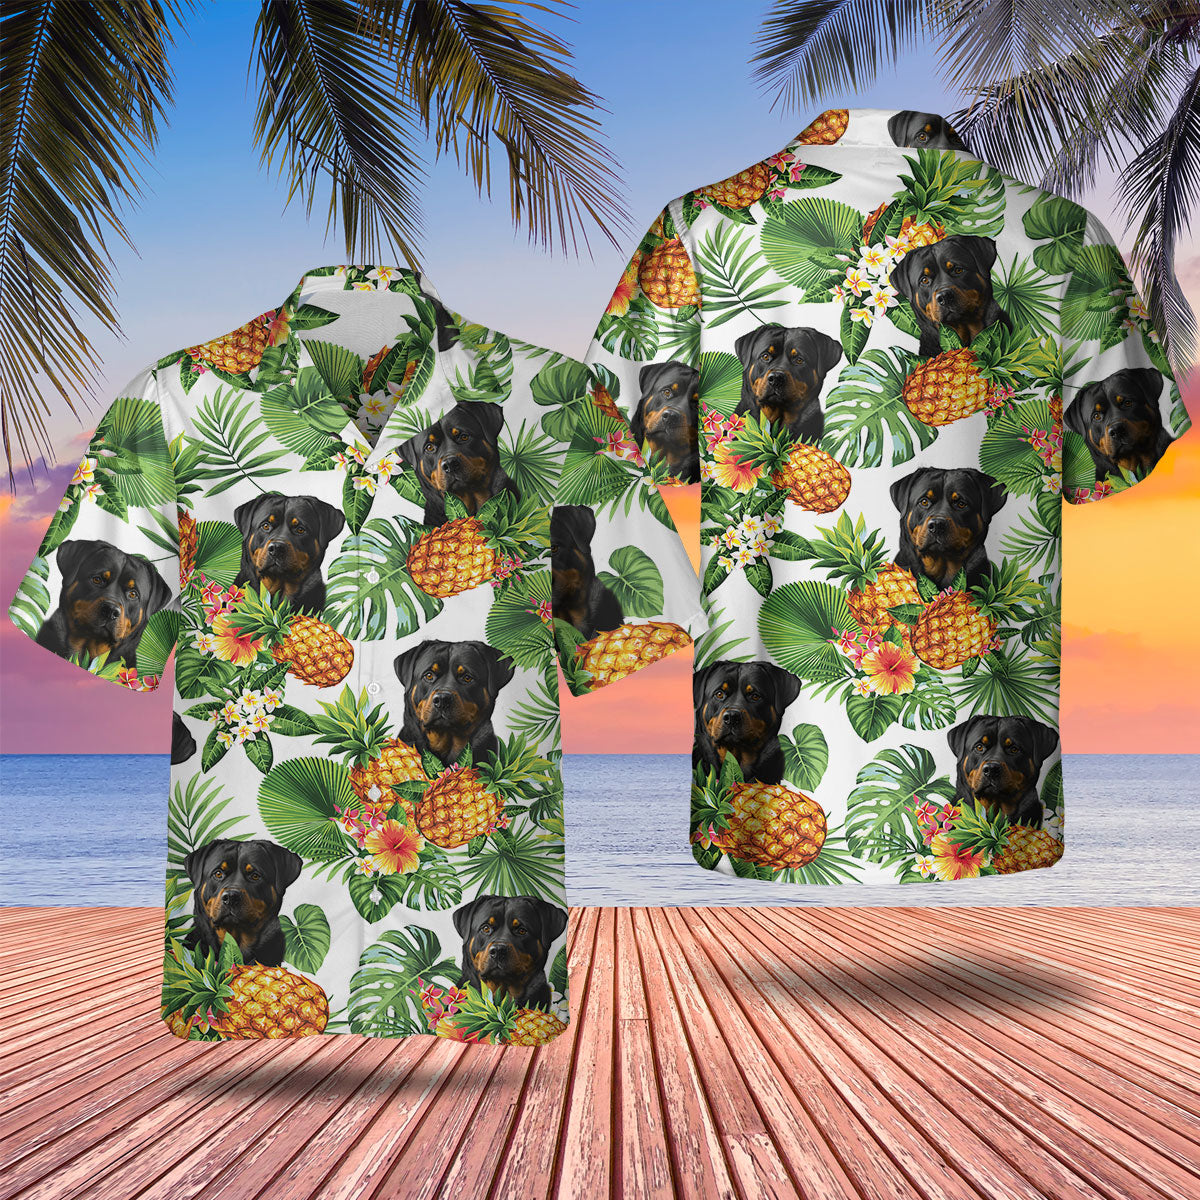 Rottweiler AI - Tropical Pattern Hawaiian Shirt